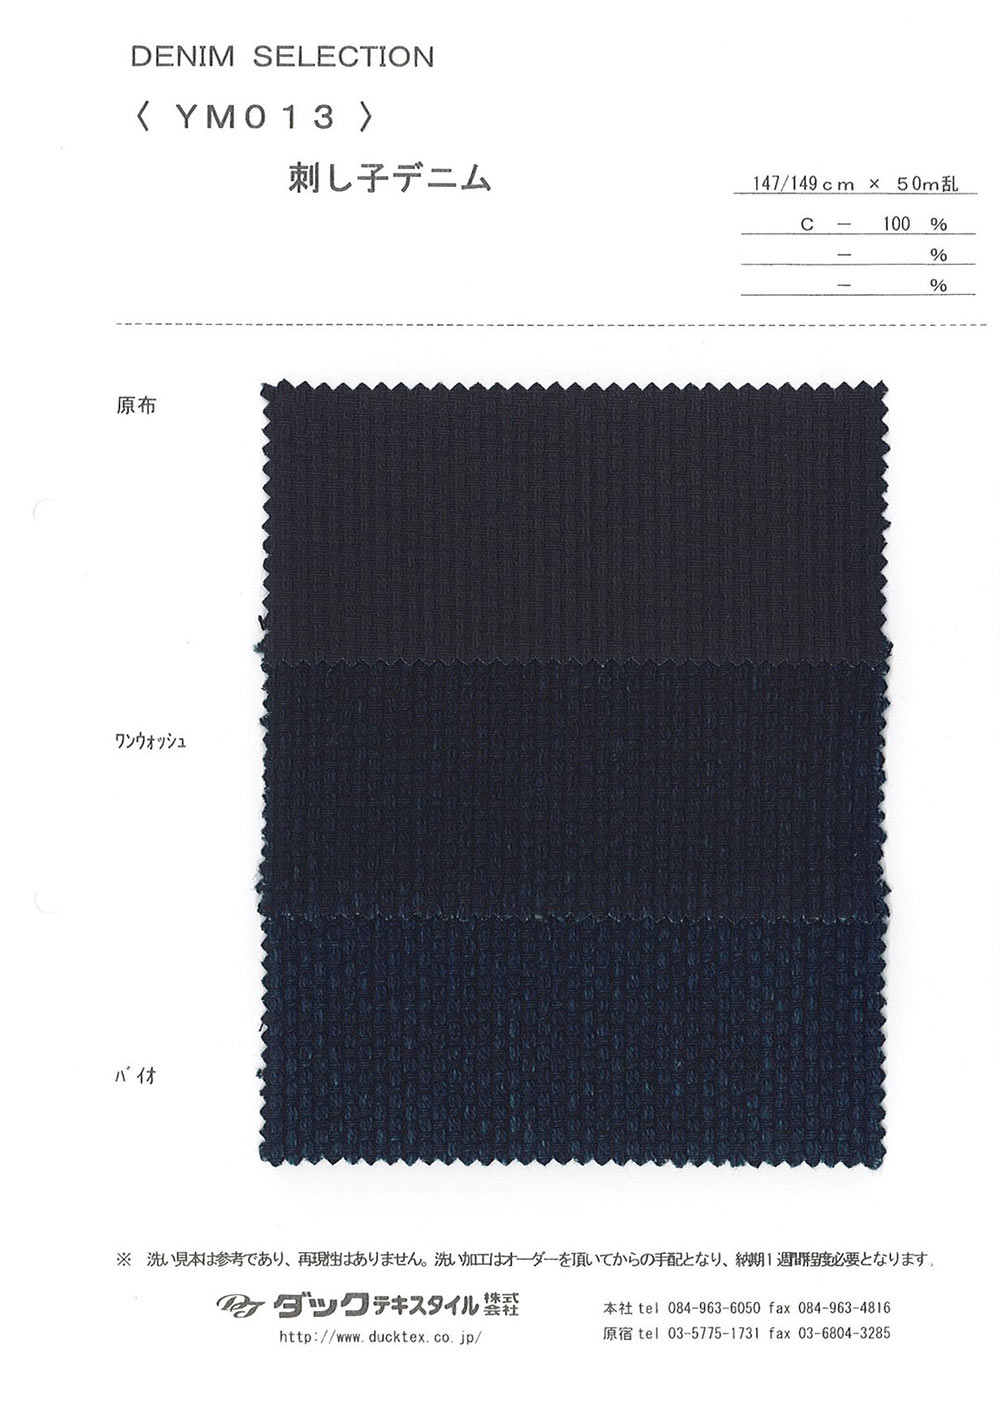 YM013 Sashiko Denim[Textile / Fabric] DUCK TEXTILE